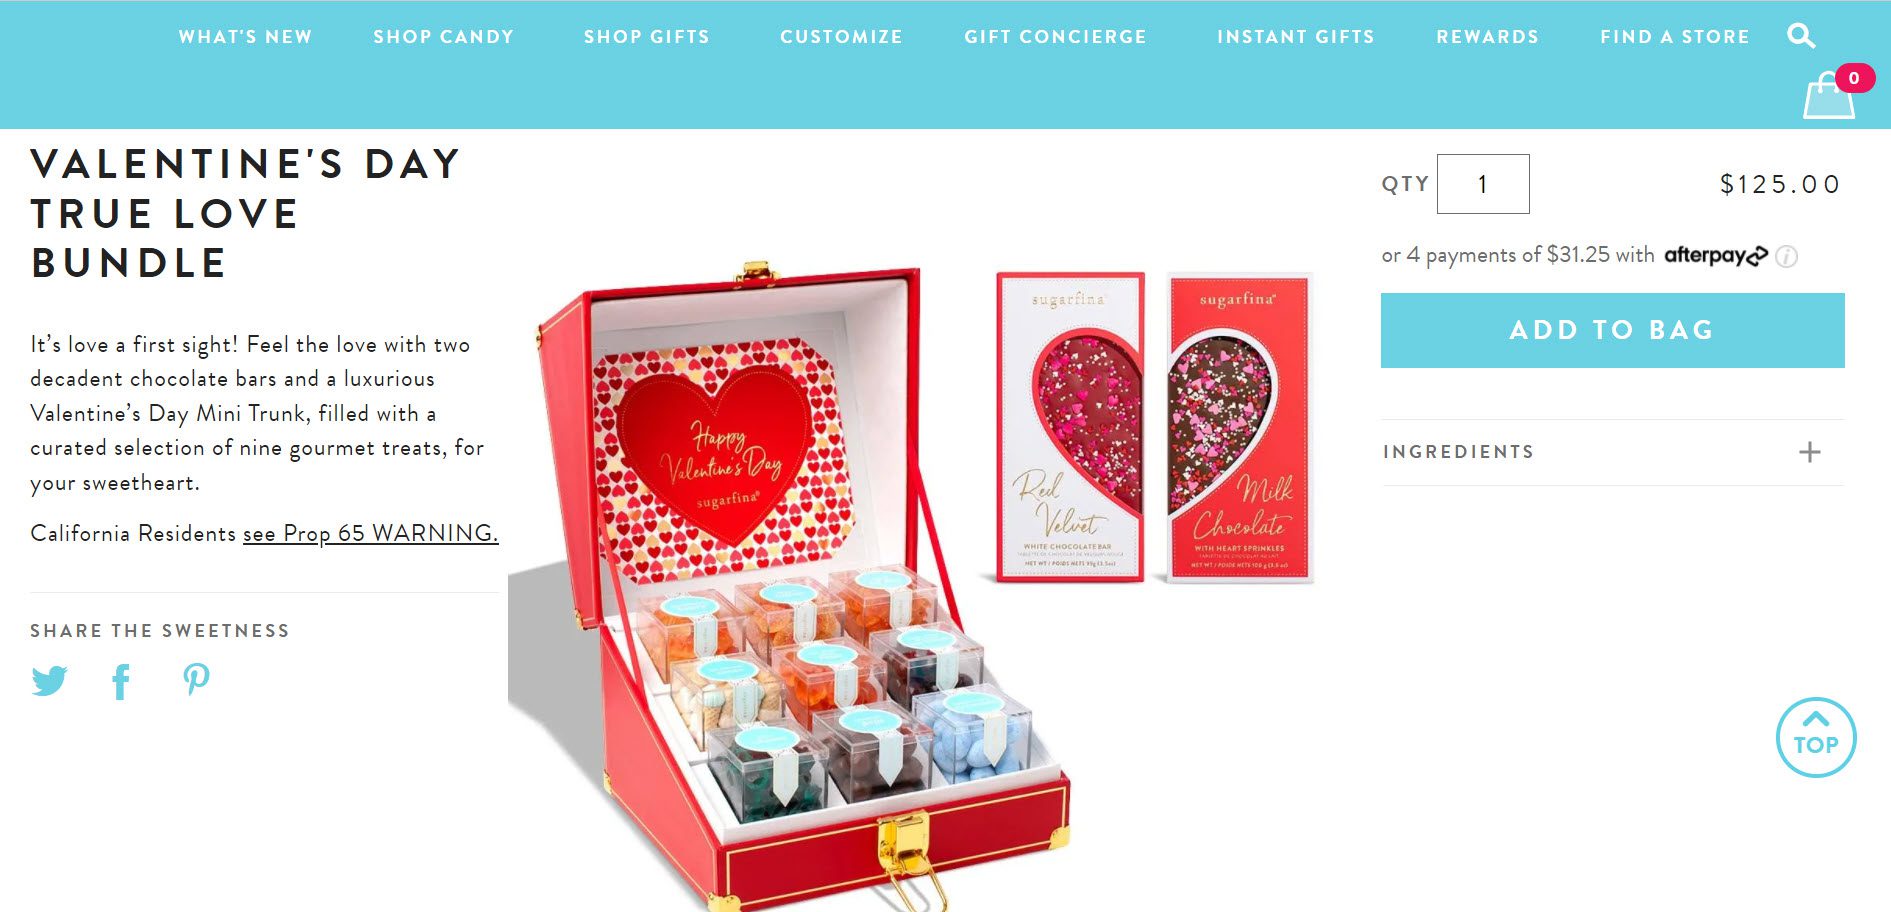 sugarfina valentine's day marketing campaign 